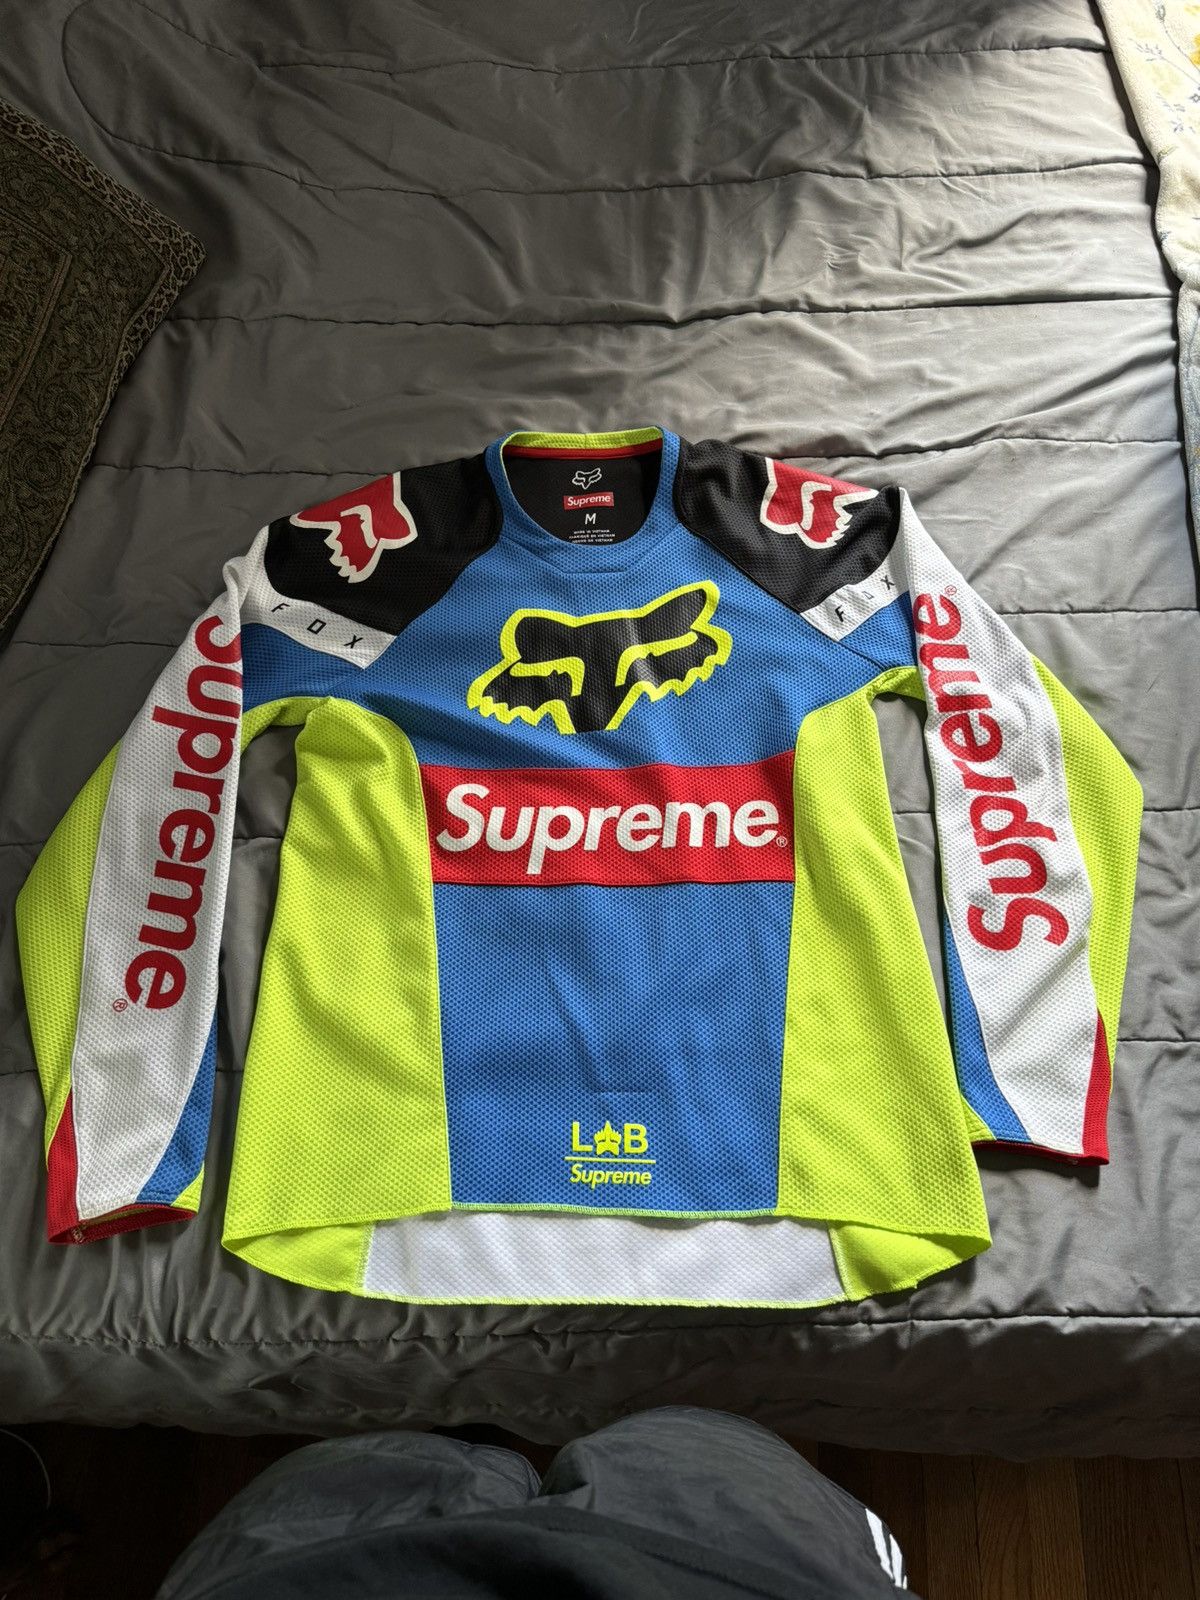 Supreme Supreme Fox Racing Moto Jersey | Grailed